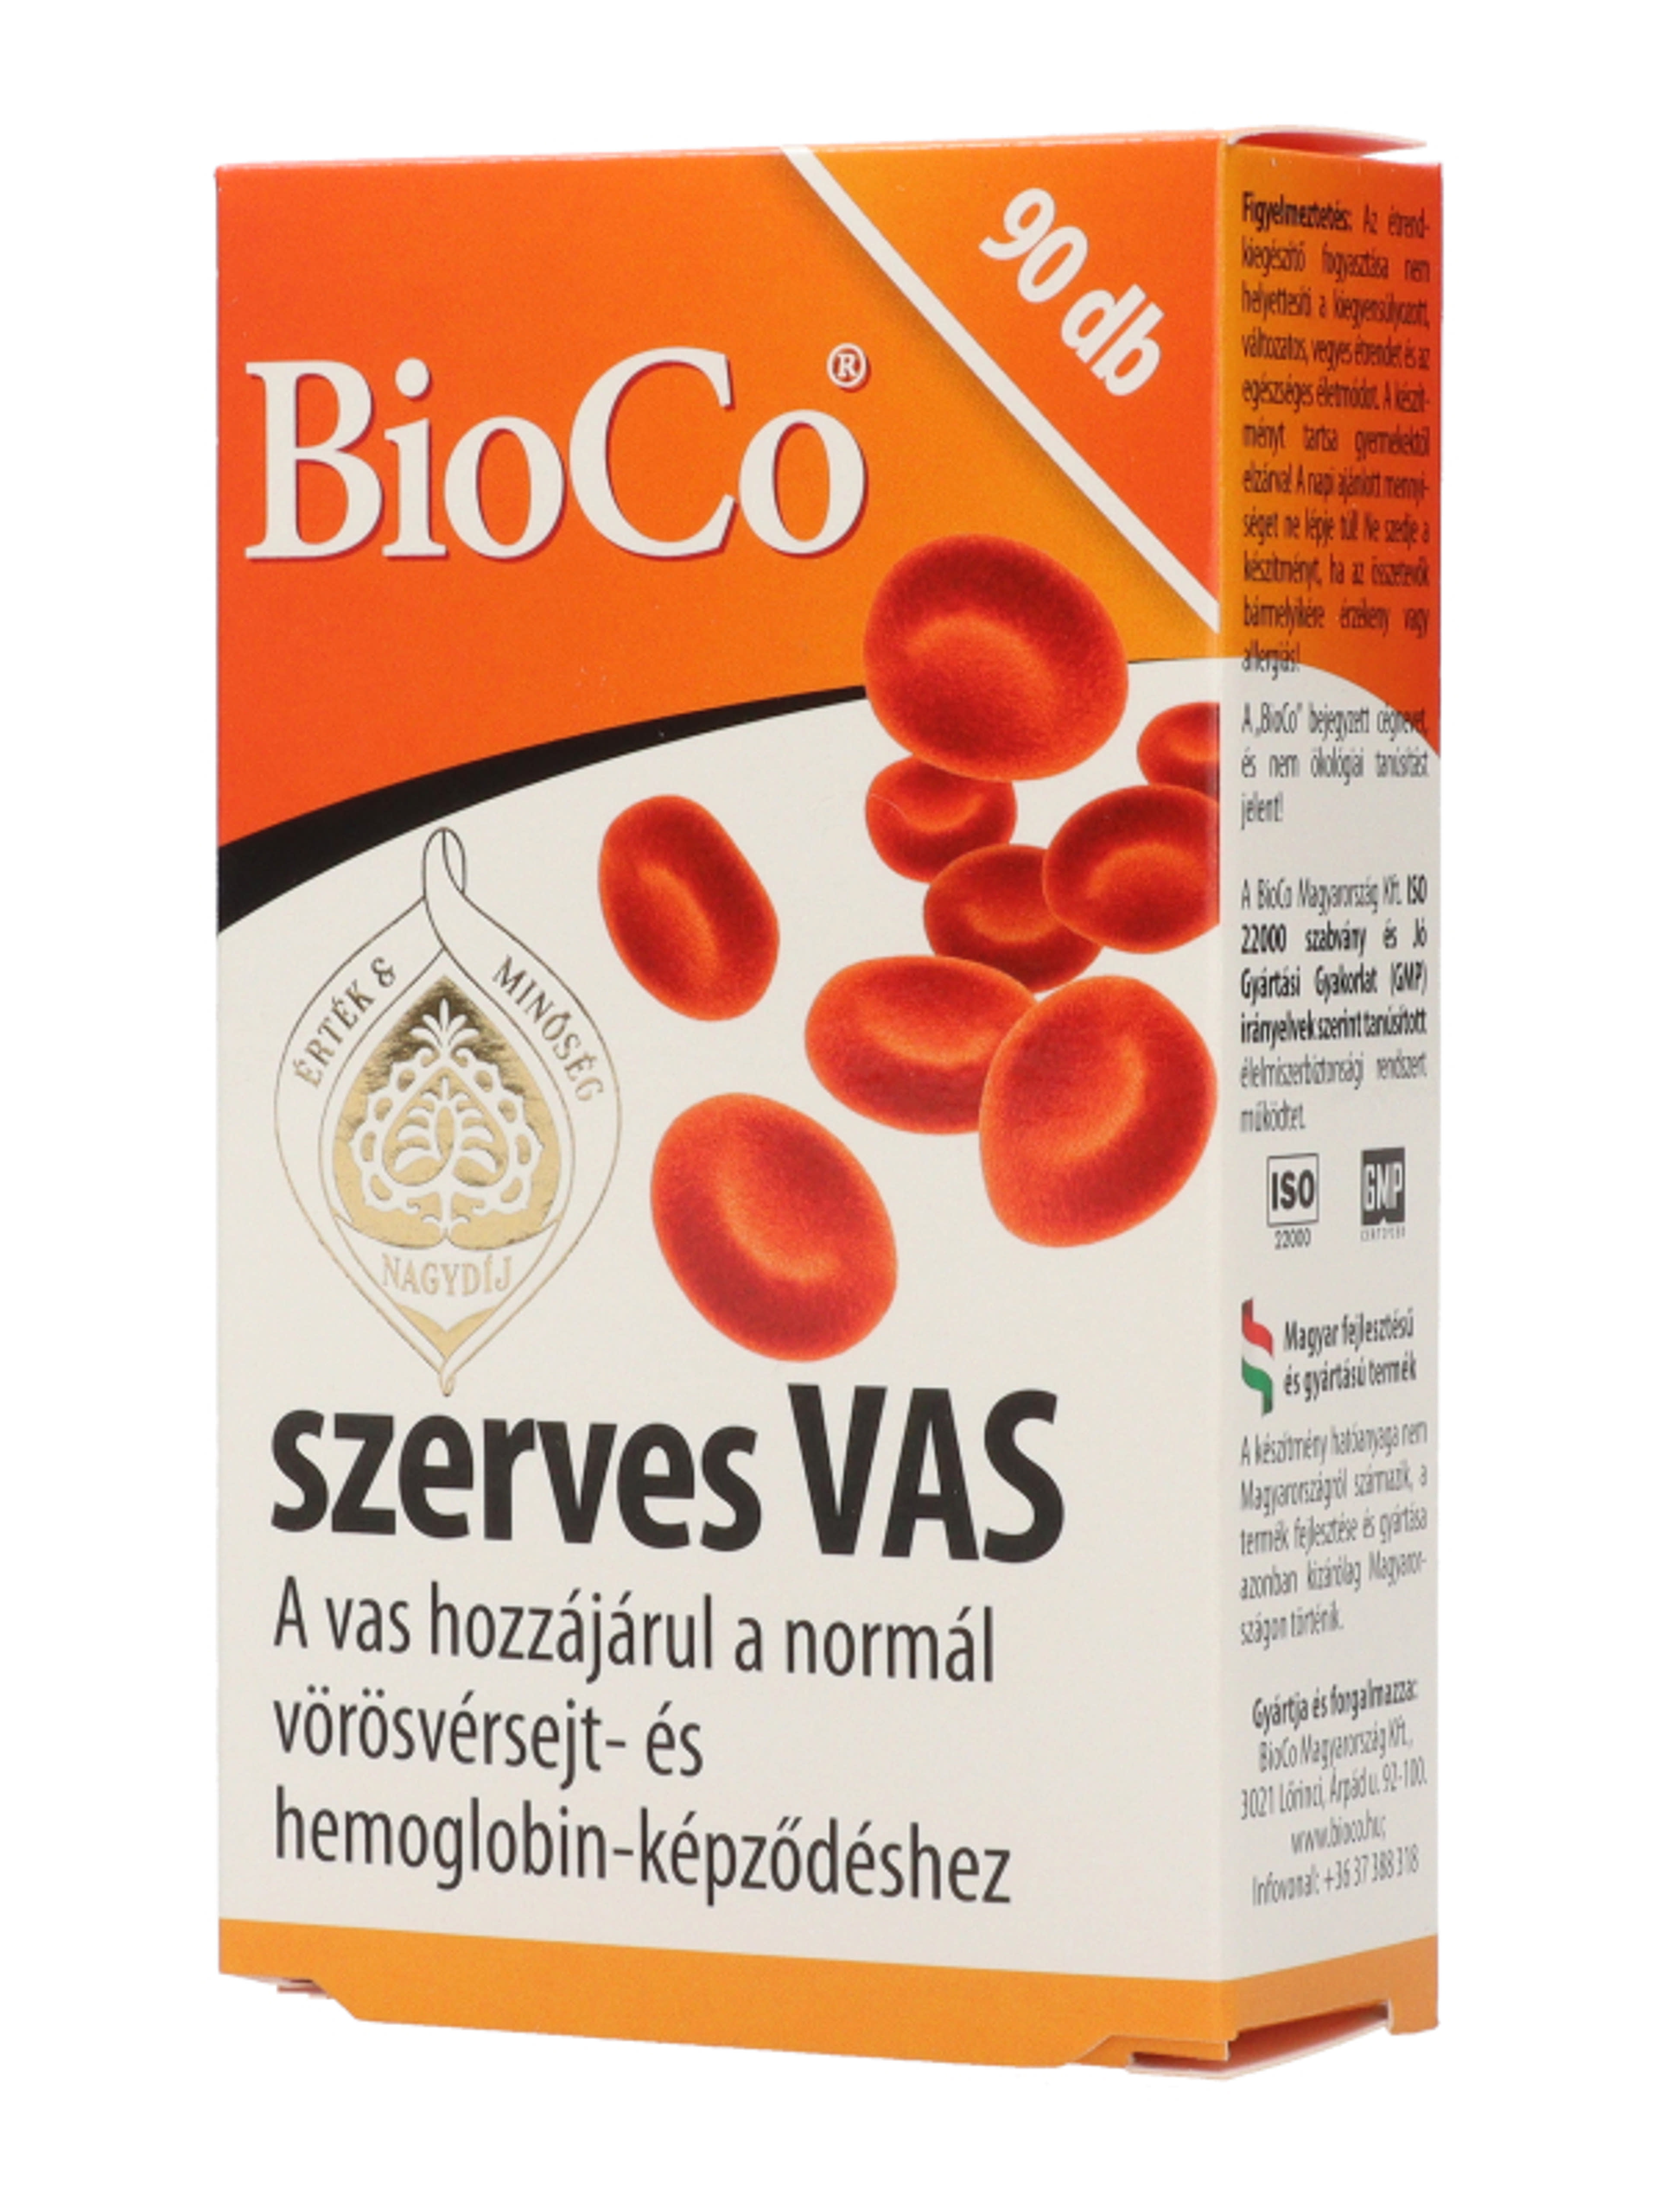 Bioco szerves vas tabletta - 90 db-5